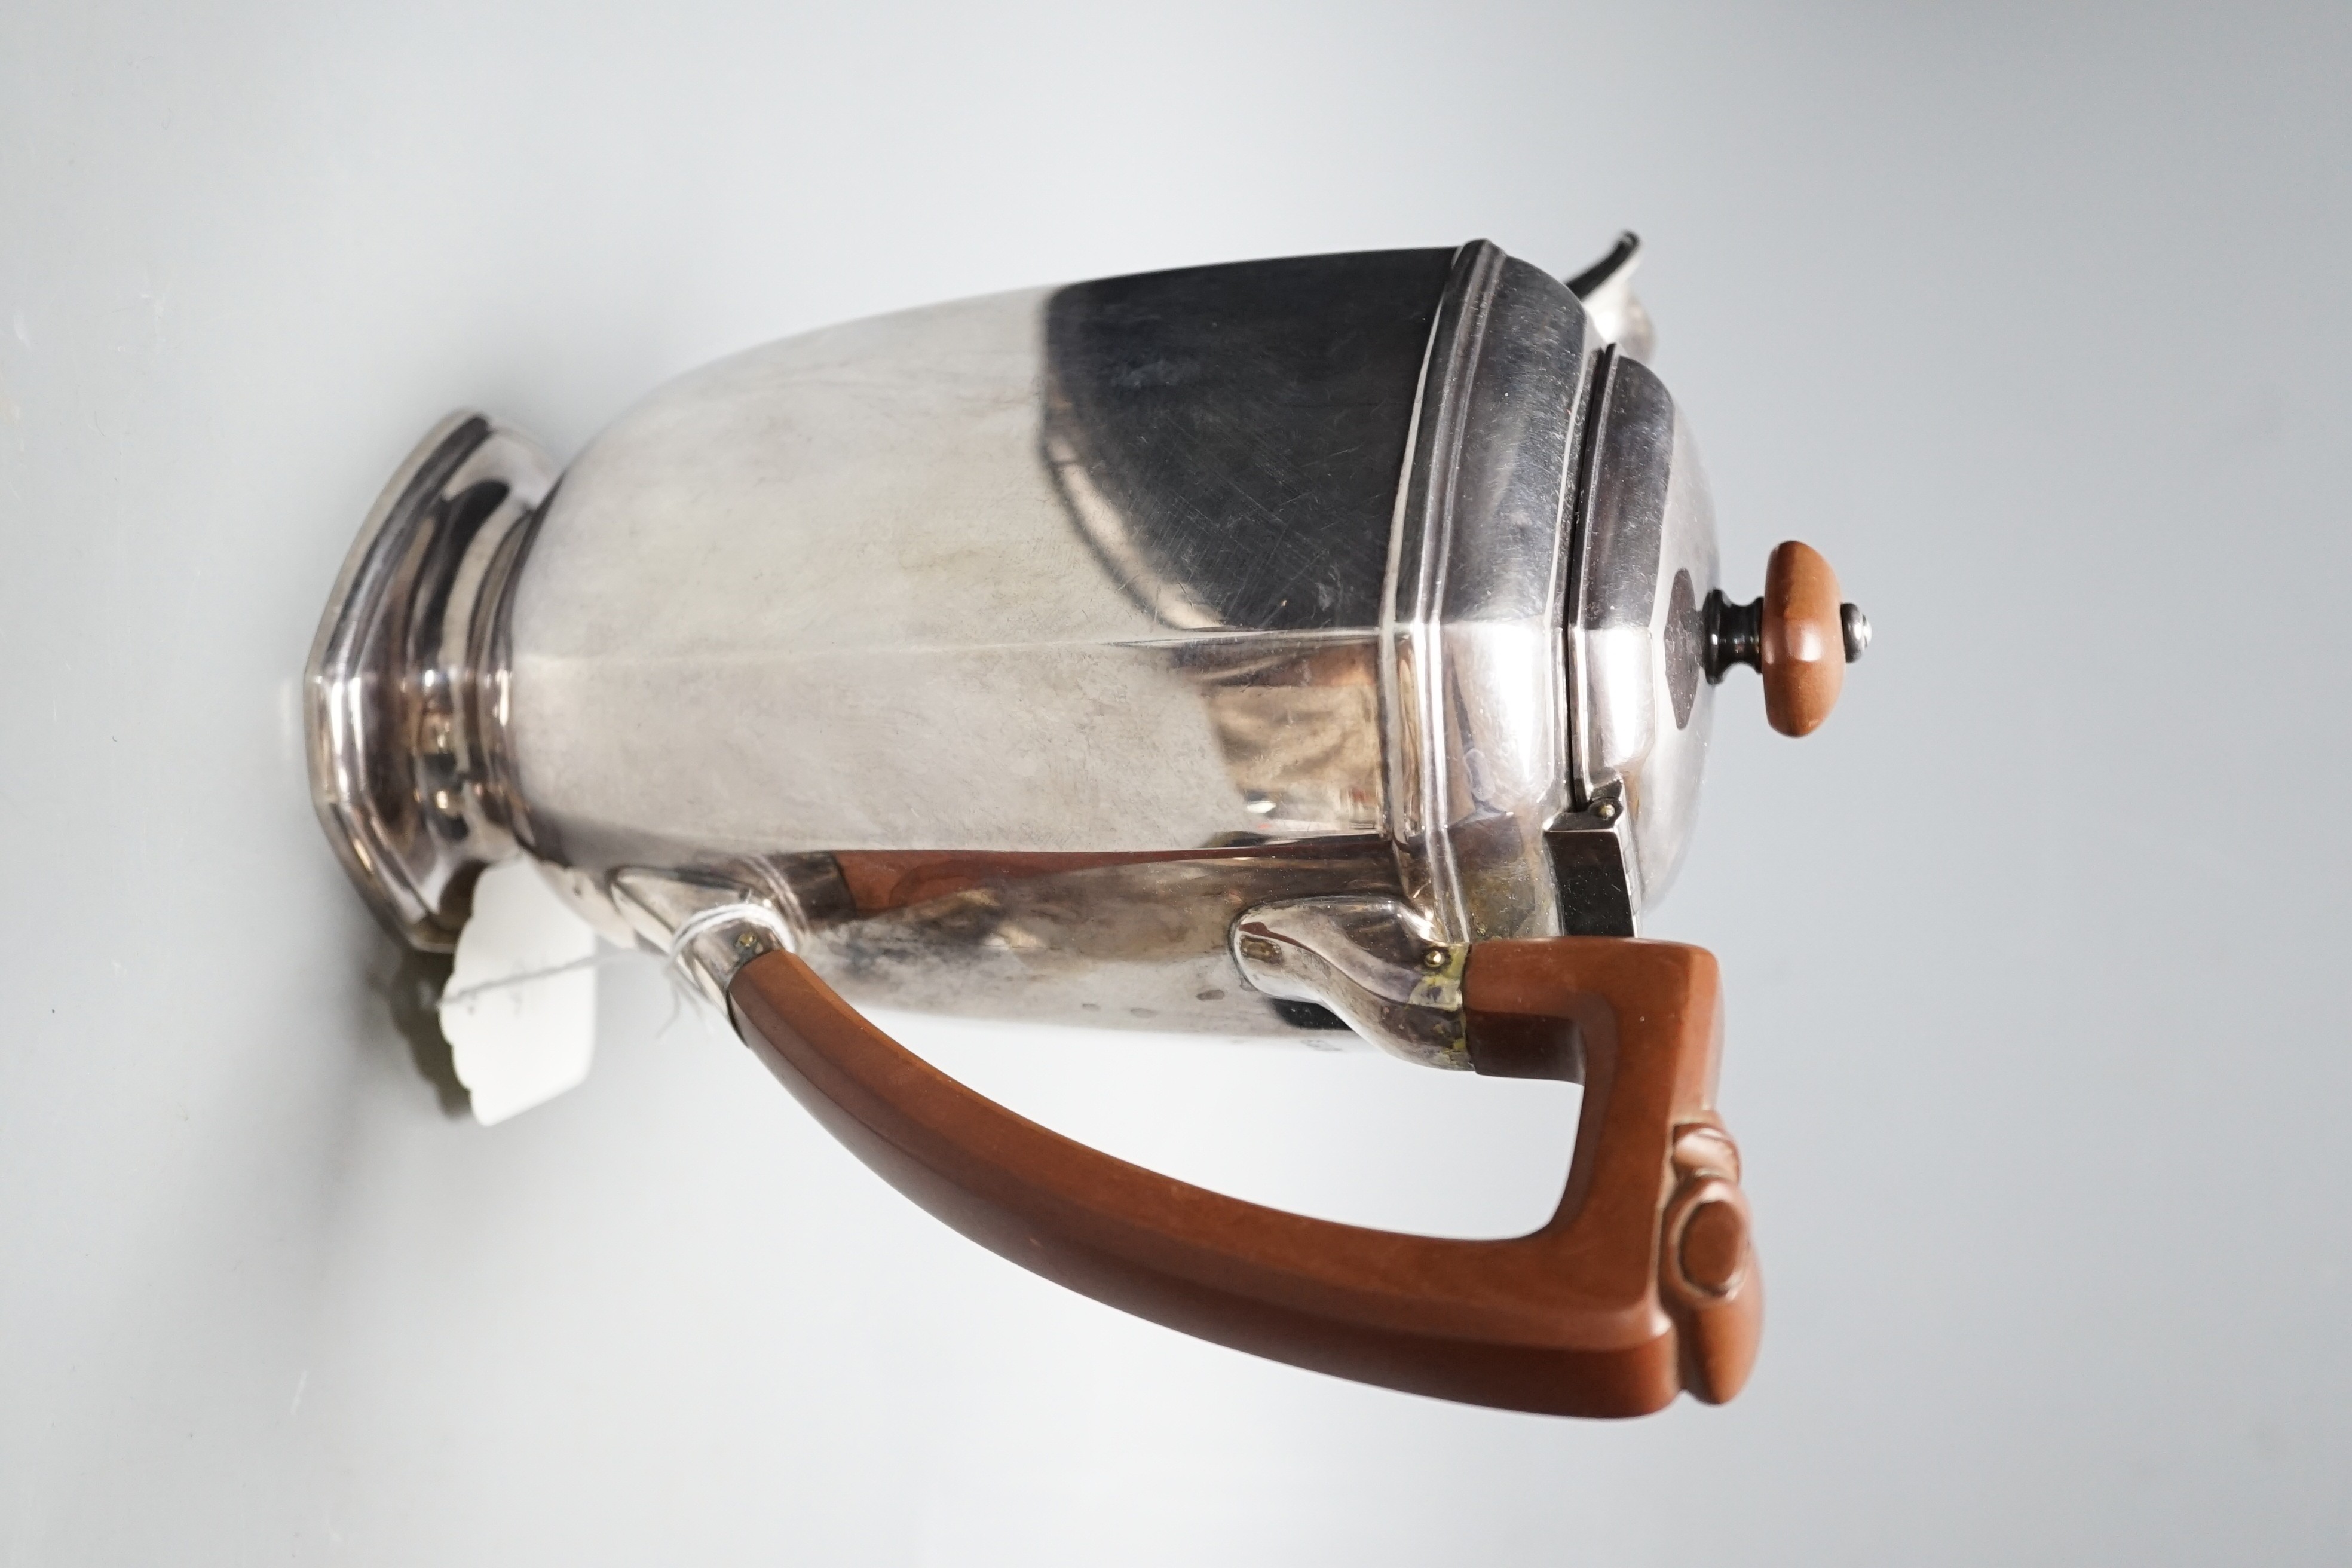 A George VI silver hot water pot, William Suckling Ltd, Birmingham, 1937, 20.5cm, gross weight 17.5oz.